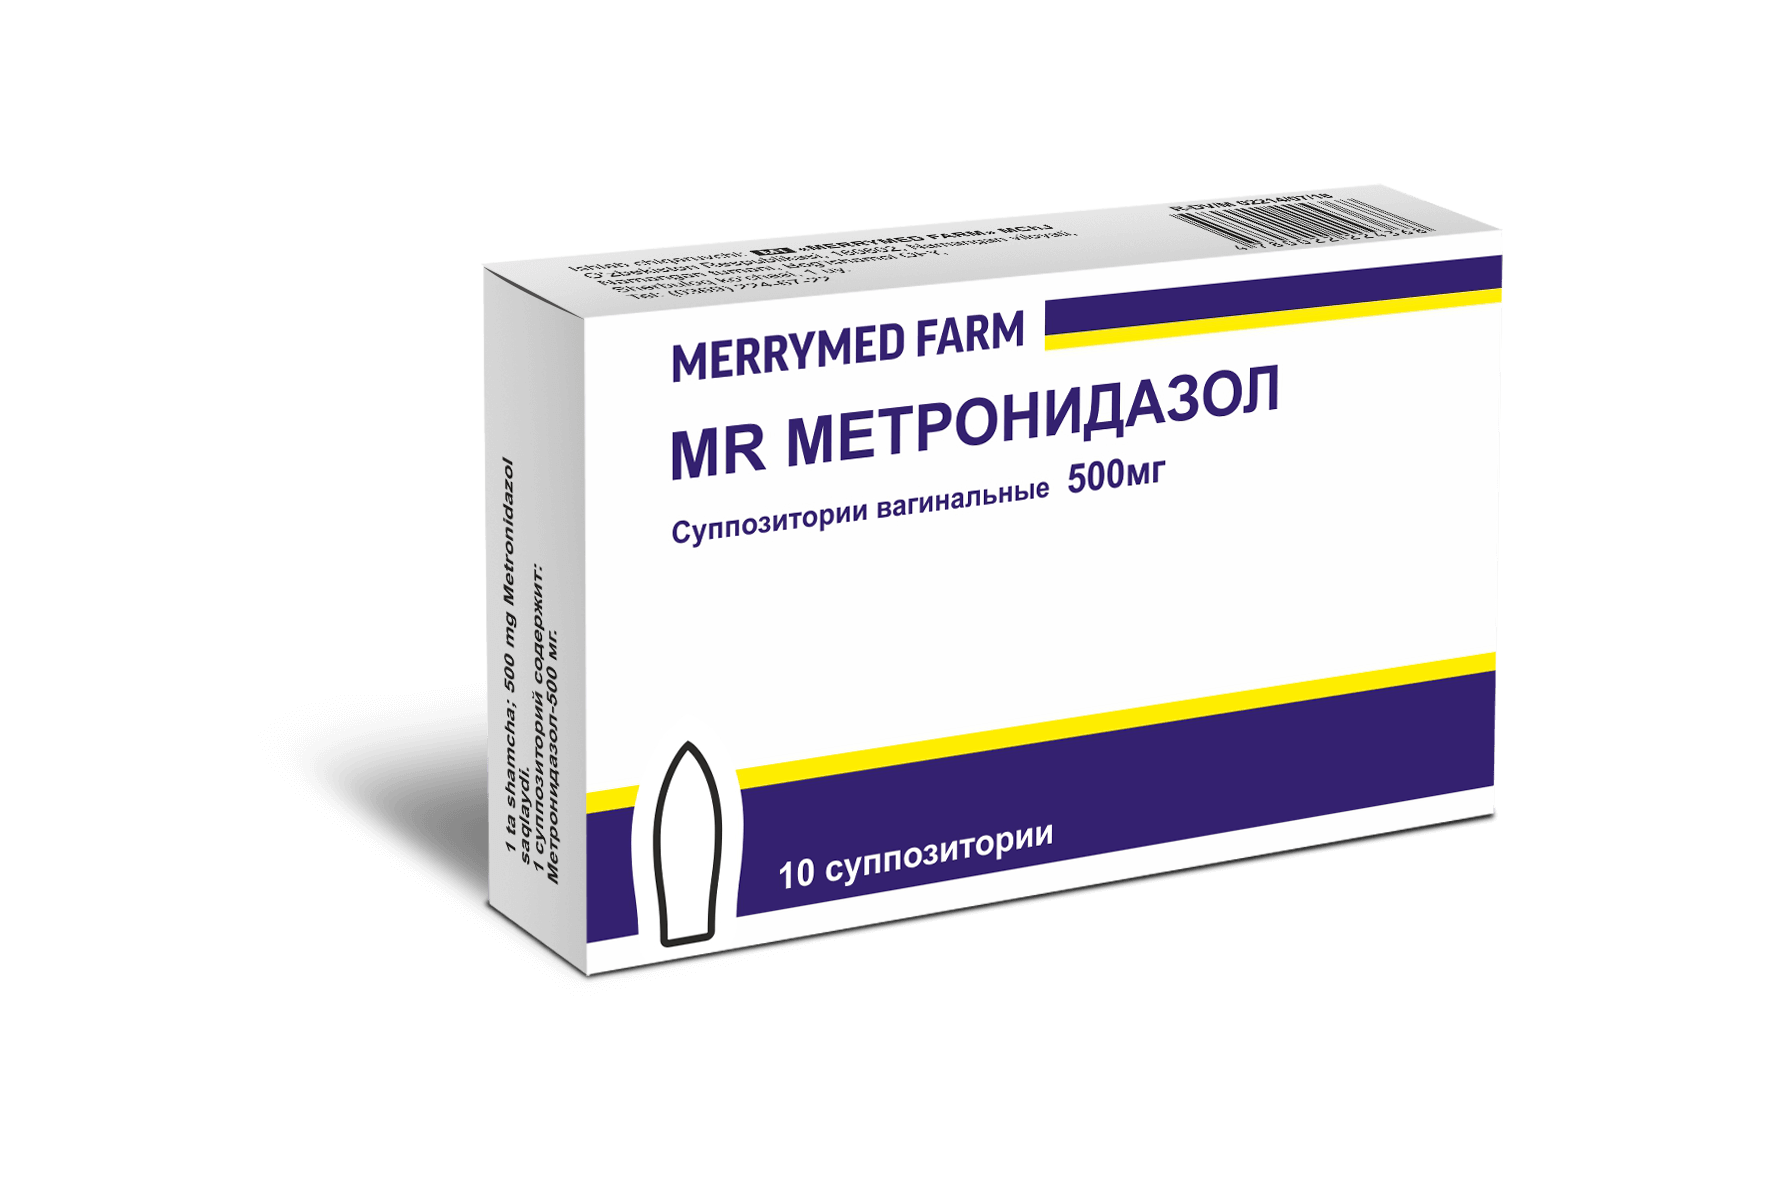 Метронидазол антибиотик ли. Метронидазол 500 свечи. Метронидазол 500 мг Вагинальные. Метронидазол суппозитории Вагинальные. Метронидазол 500 мг антибиотики.